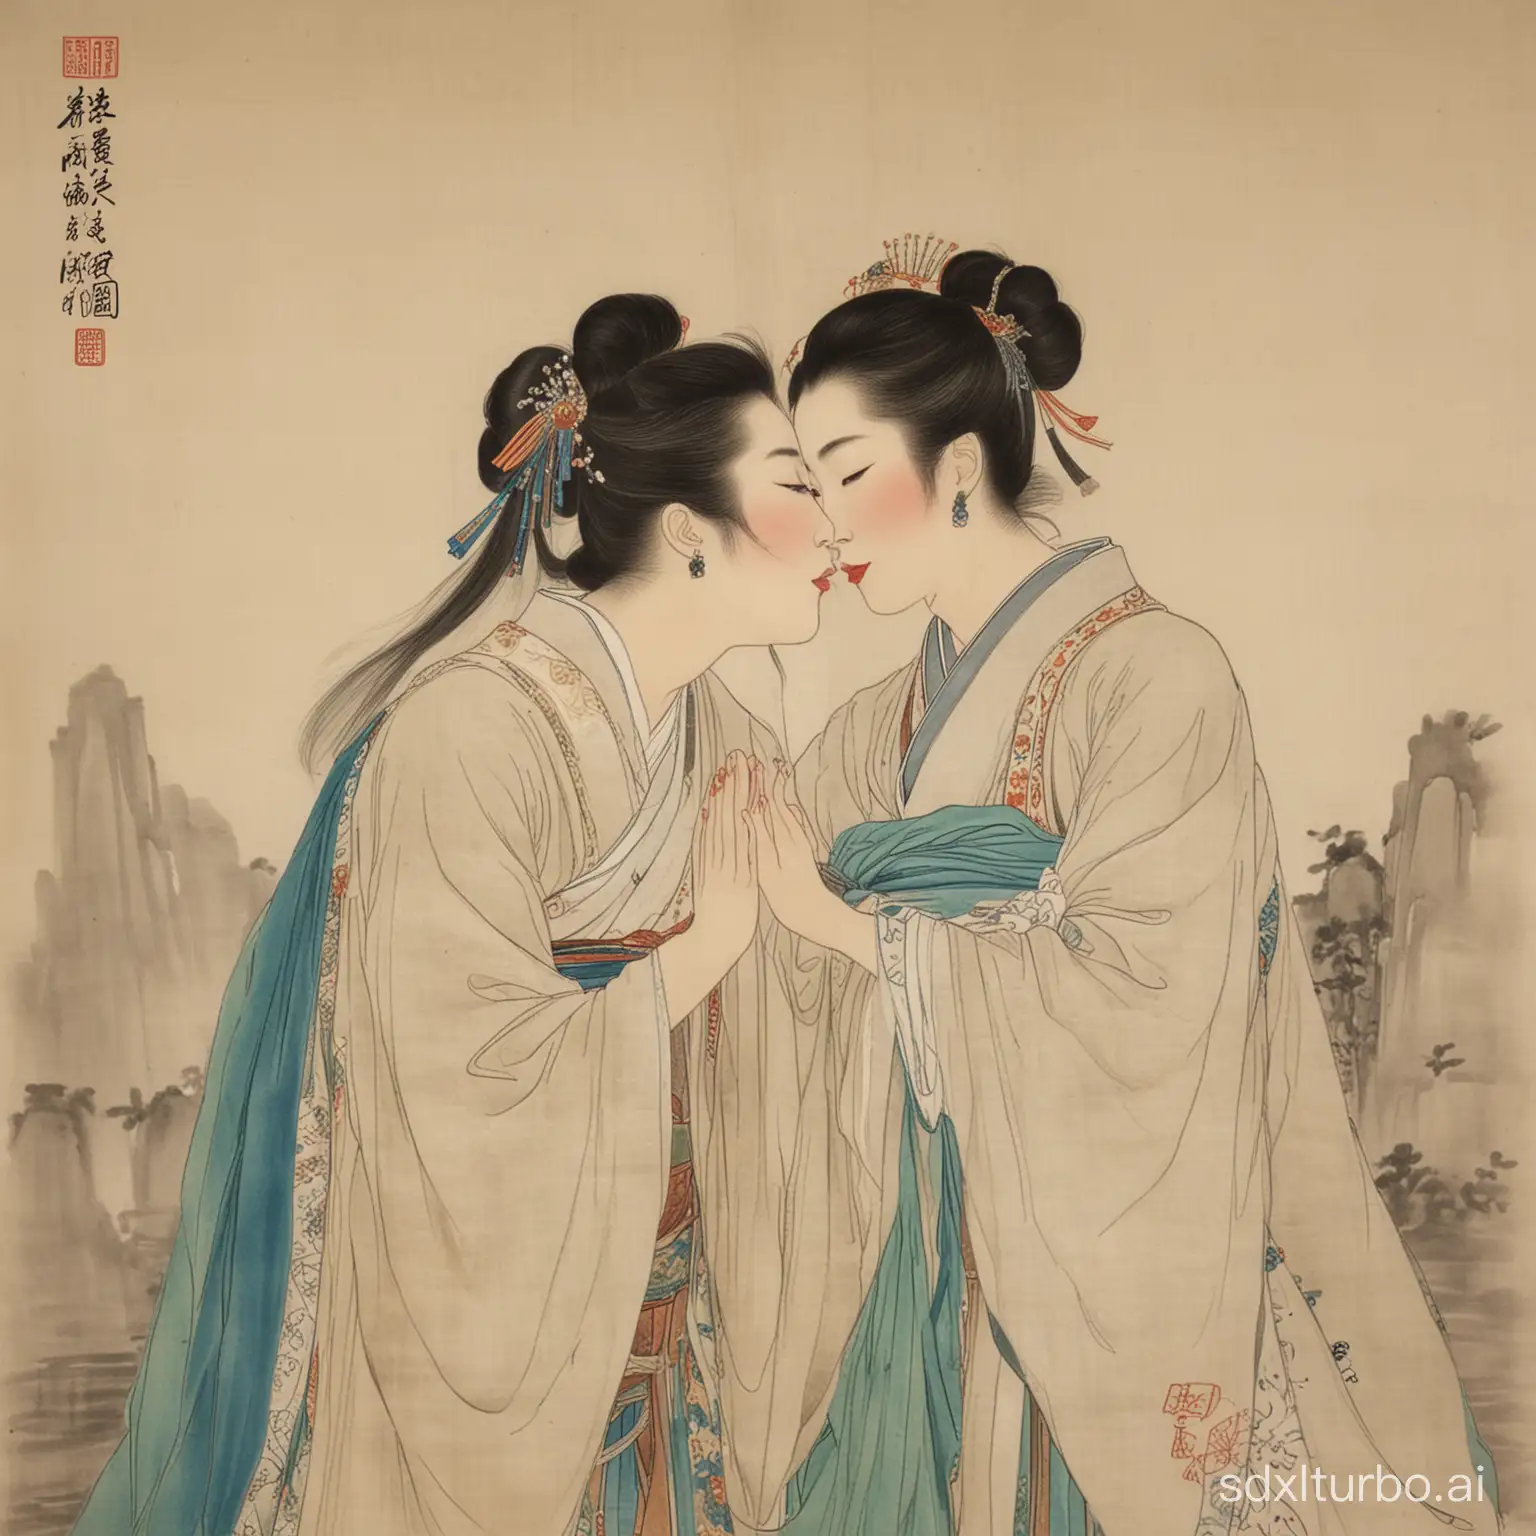 Two women Lin Daiyu kissed